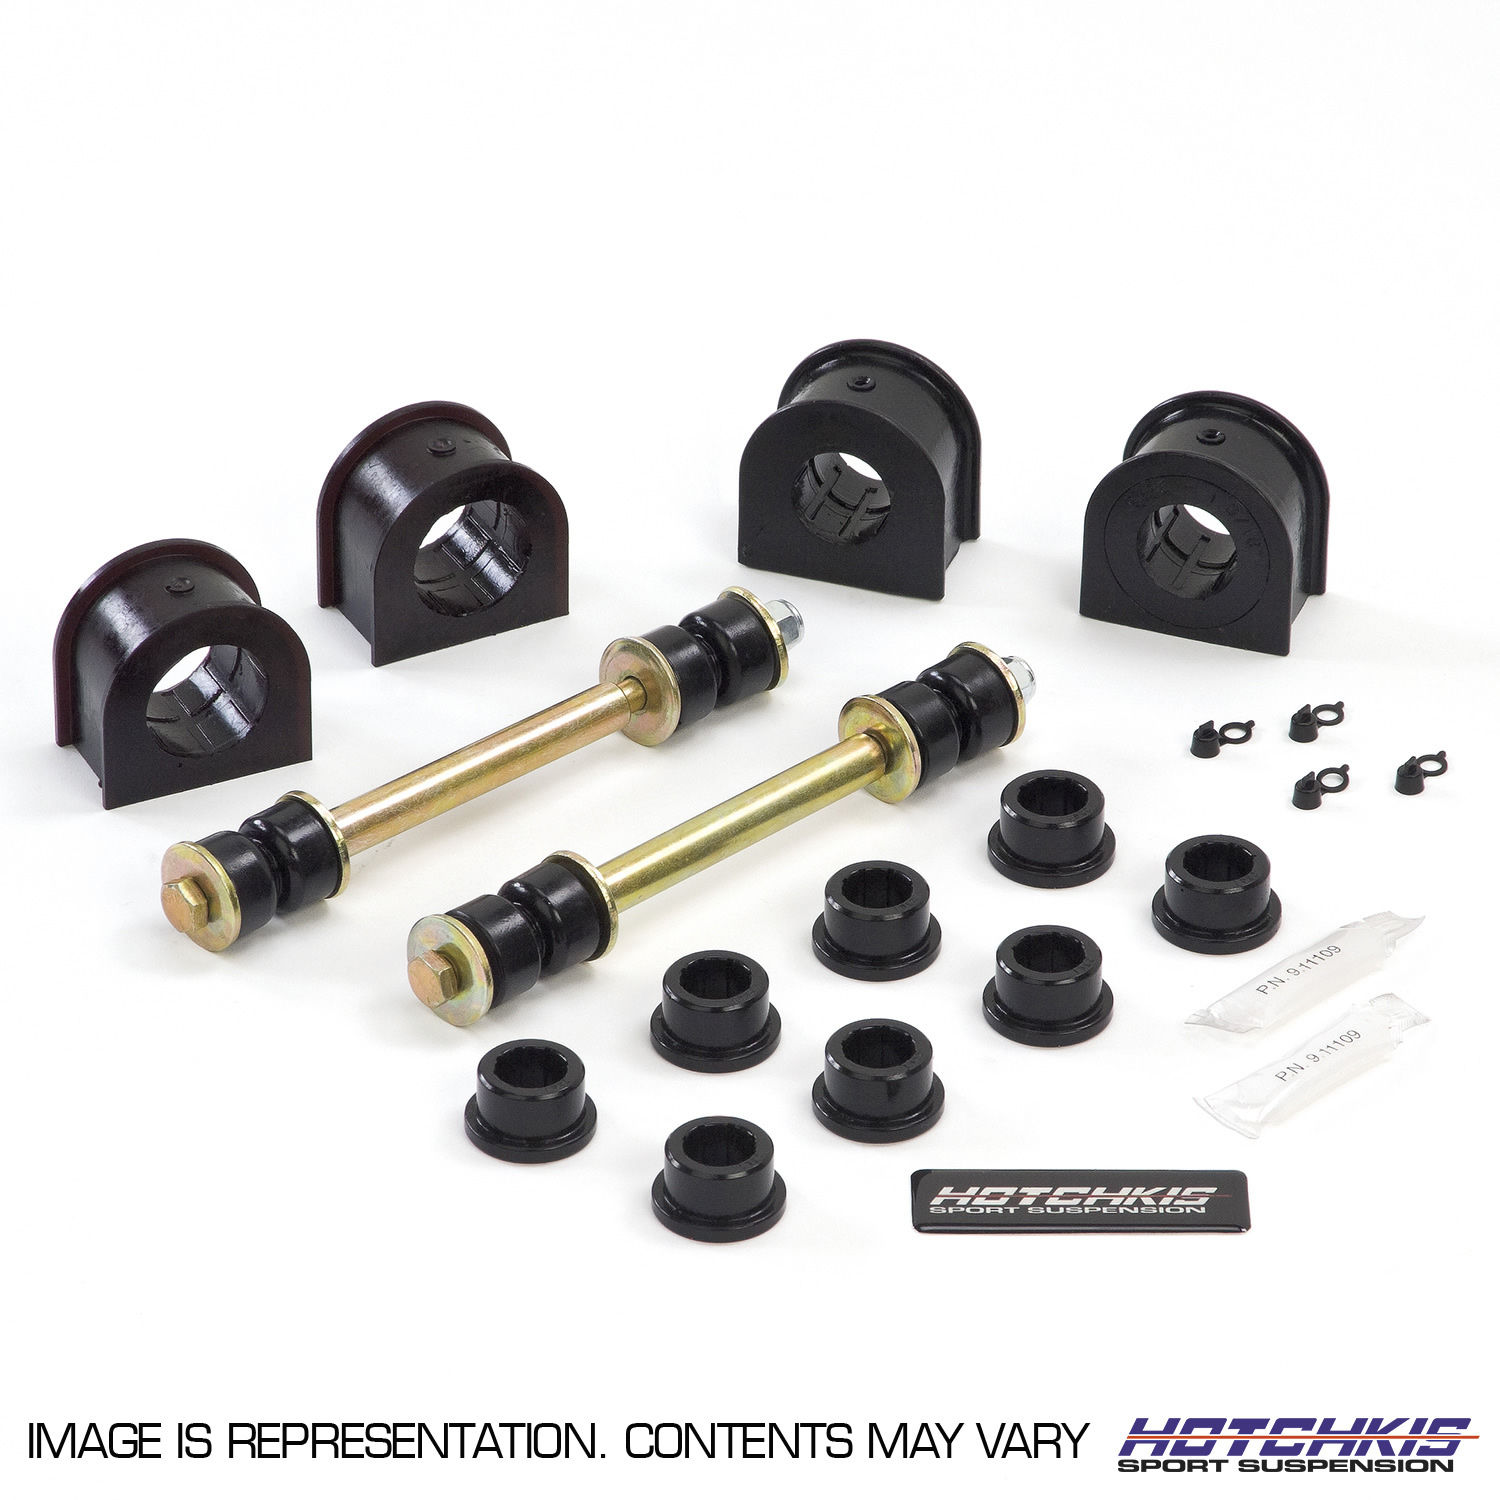 Rebuild Service Kit For Hotchkis Sport Suspension Product Kit 2272